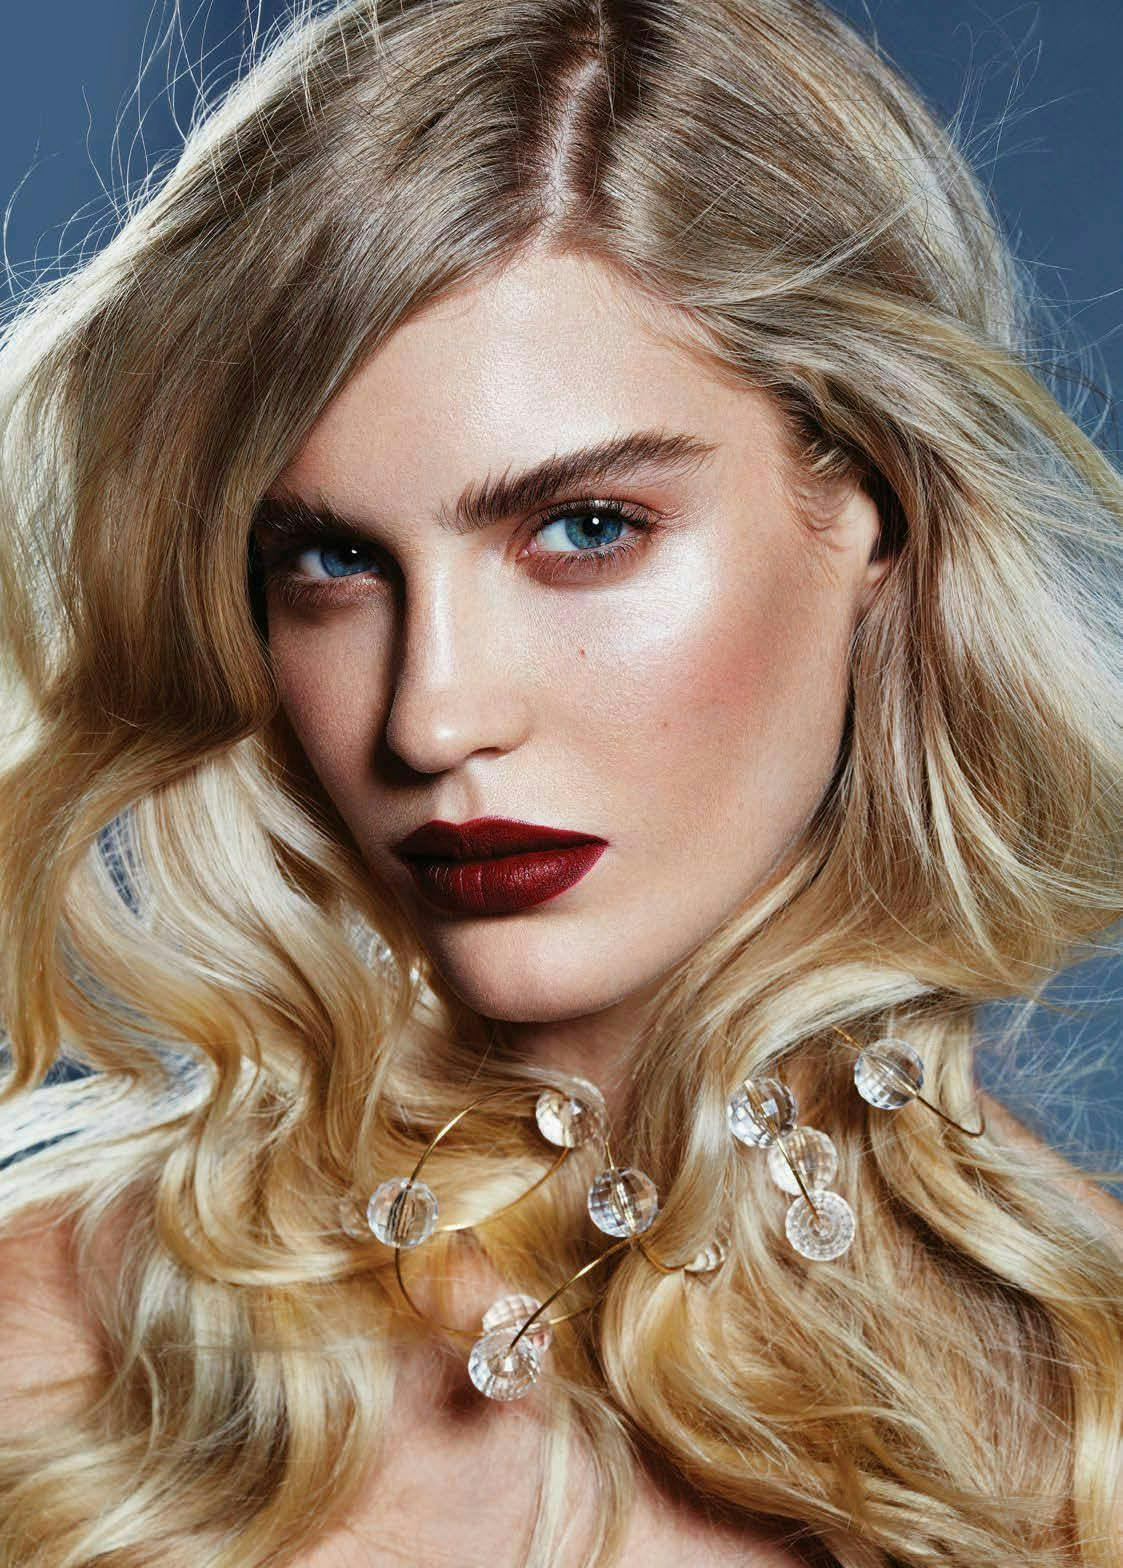 blonde teen kid girl person female face hair lipstick cosmetics